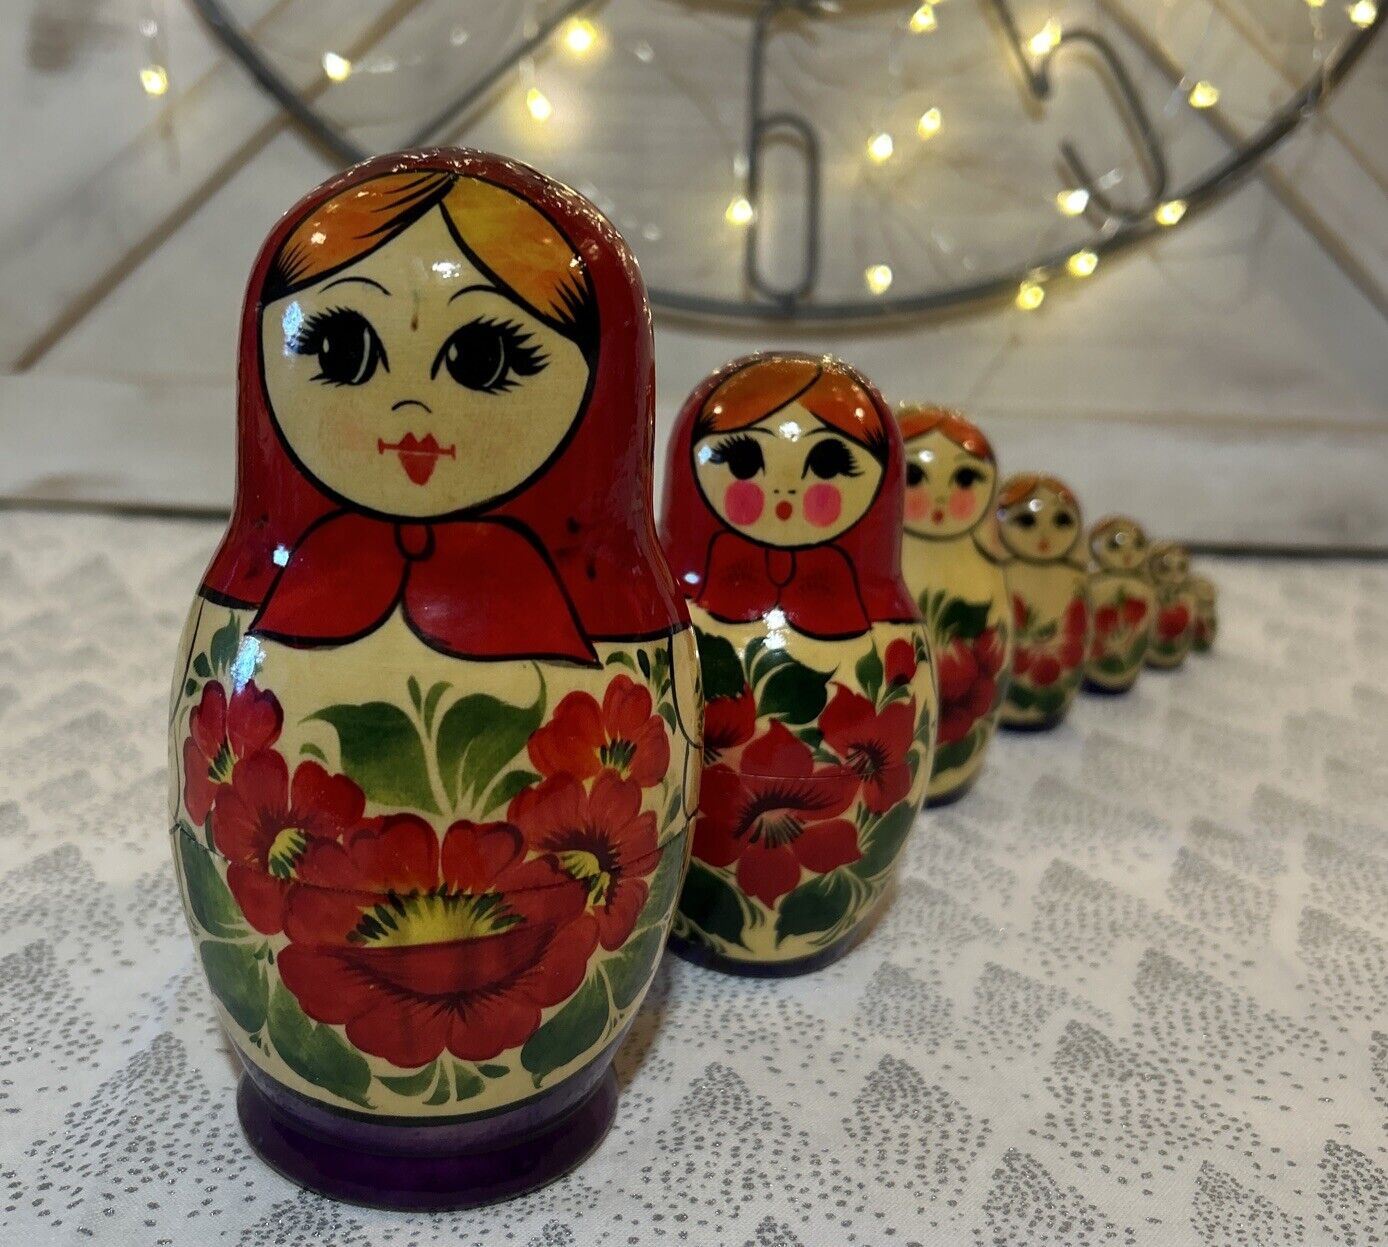 Traditional Poppy Flower Russian Nesting Doll - 7 Pce Red Head Girls